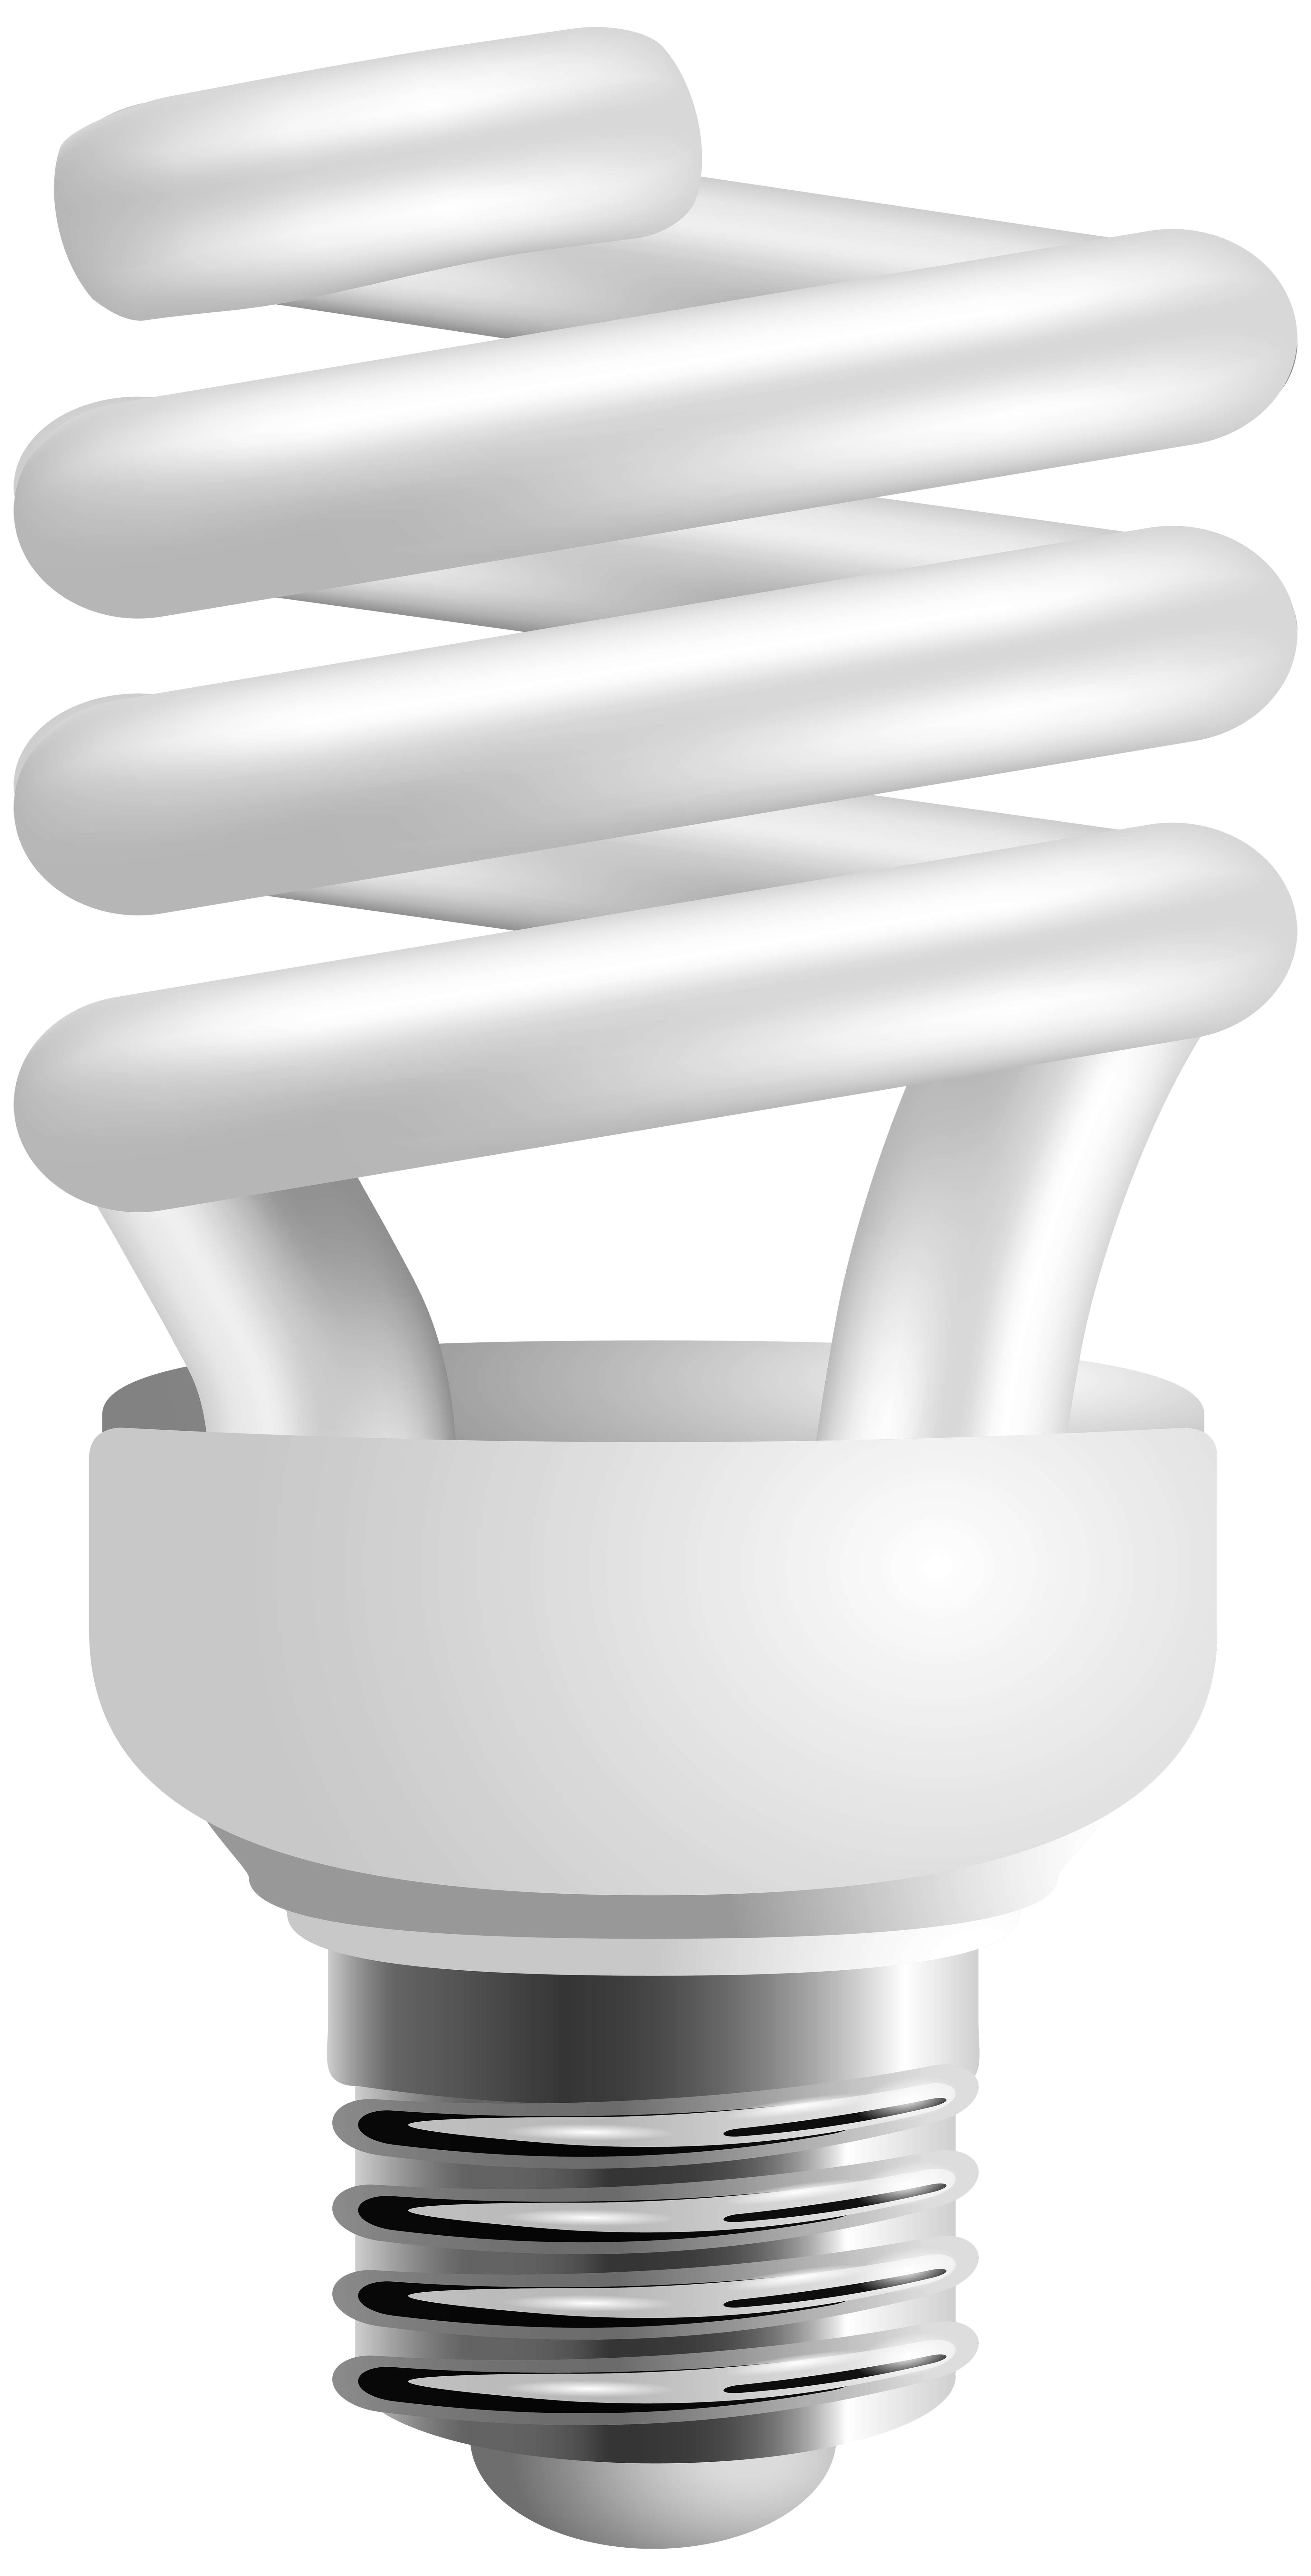 Energy Saving Light Bulb PNG Clip Art - Best WEB Clipart